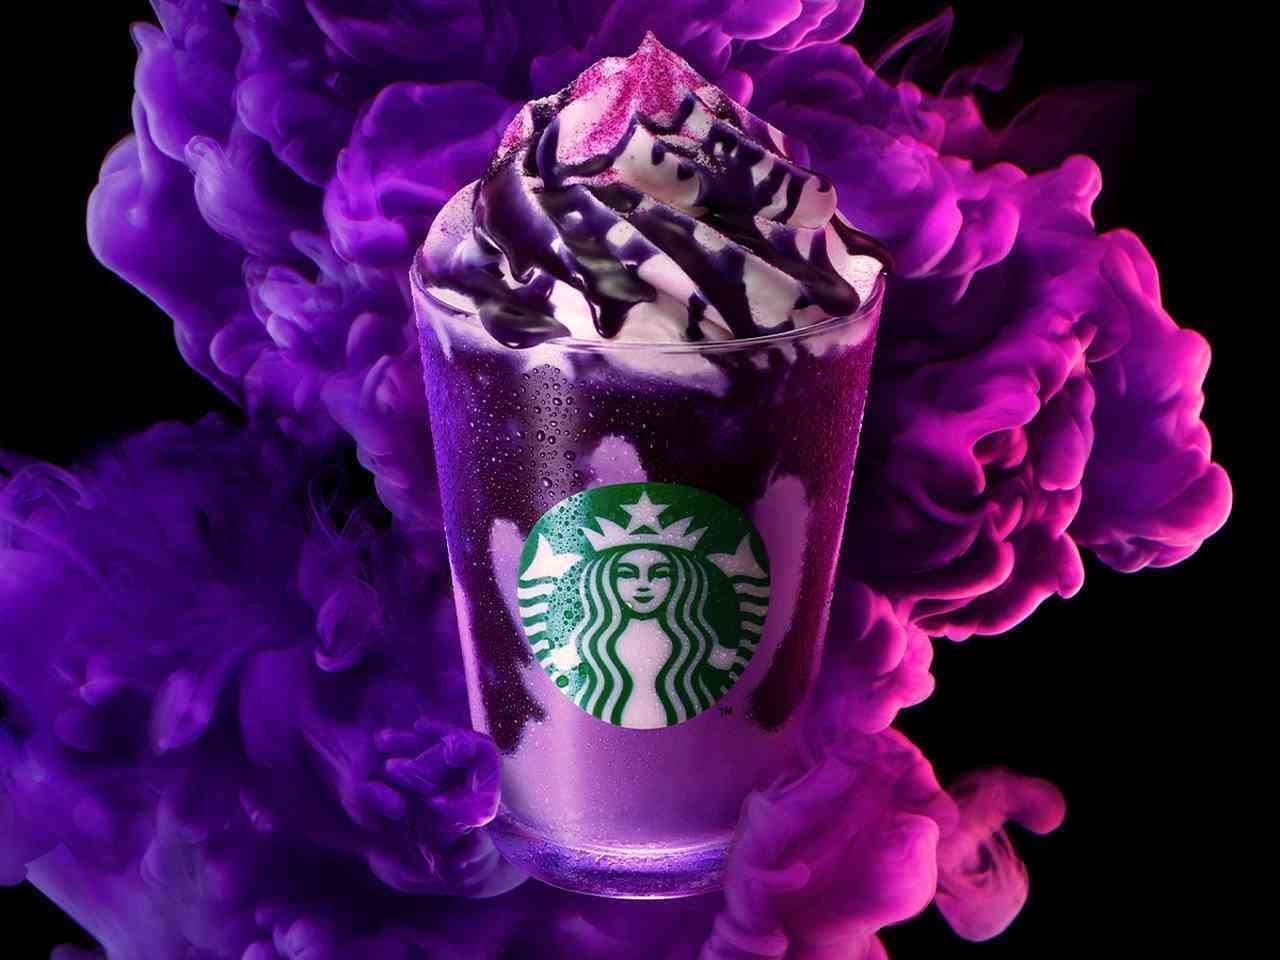 Starbucks "Purple Halloween Frappuccino".